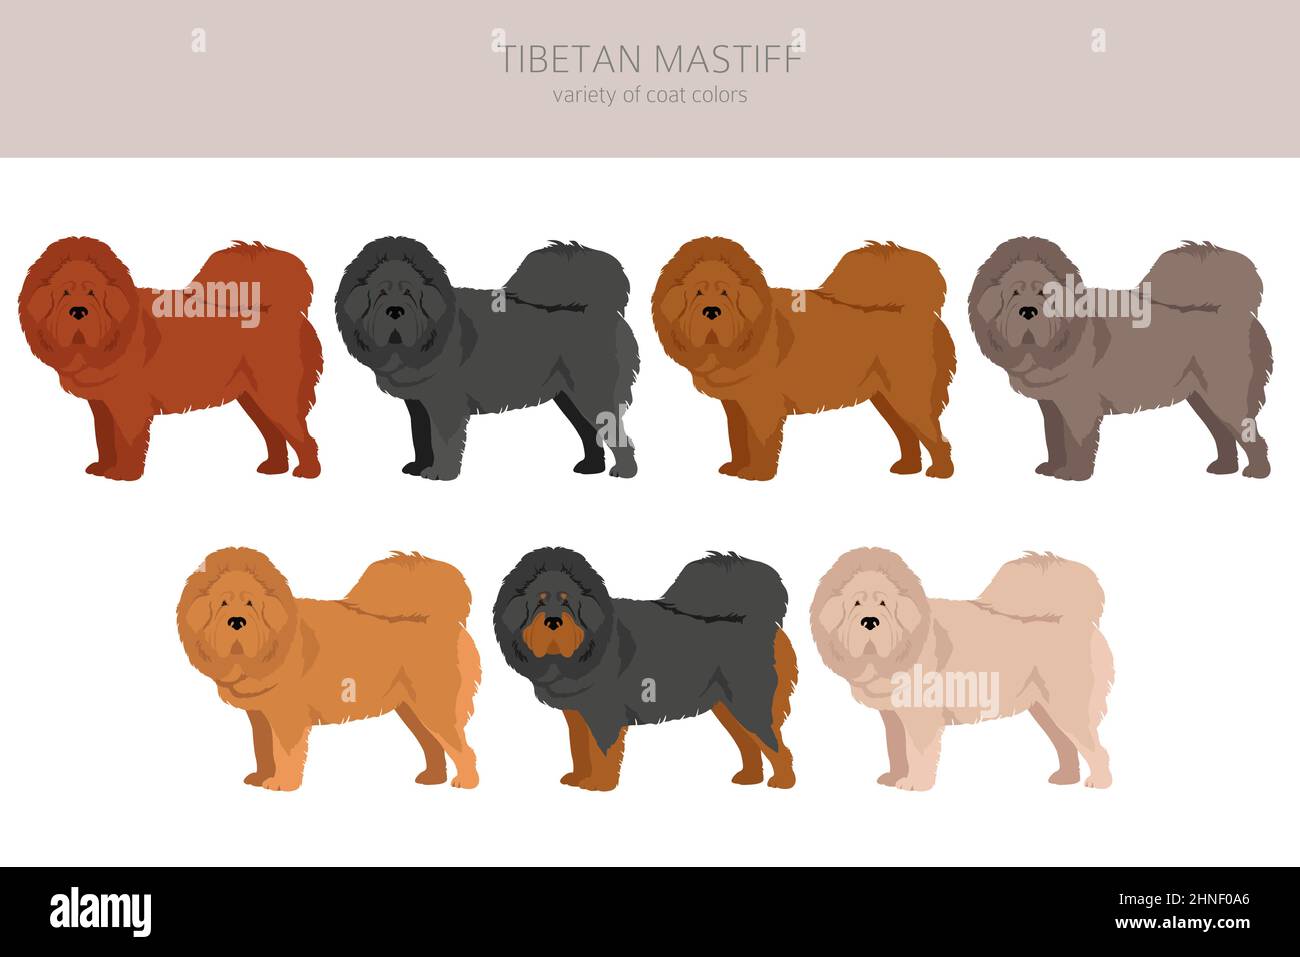 Tibetan mastiff clipart. Different poses, coat colors set.  Vector illustration Stock Vector